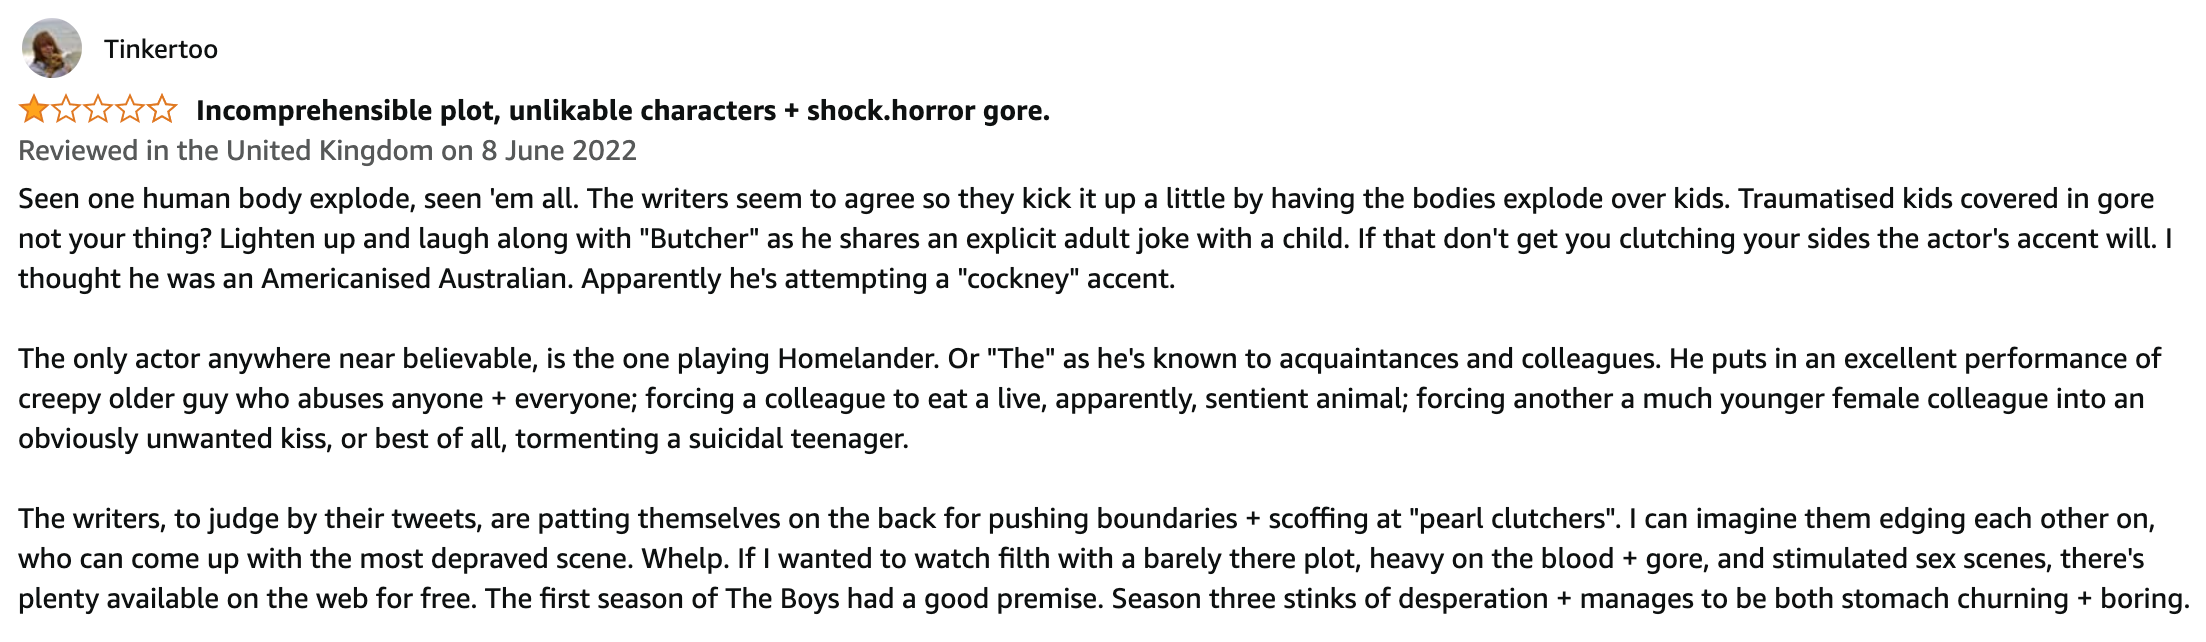 The Boy season 3 review bombed